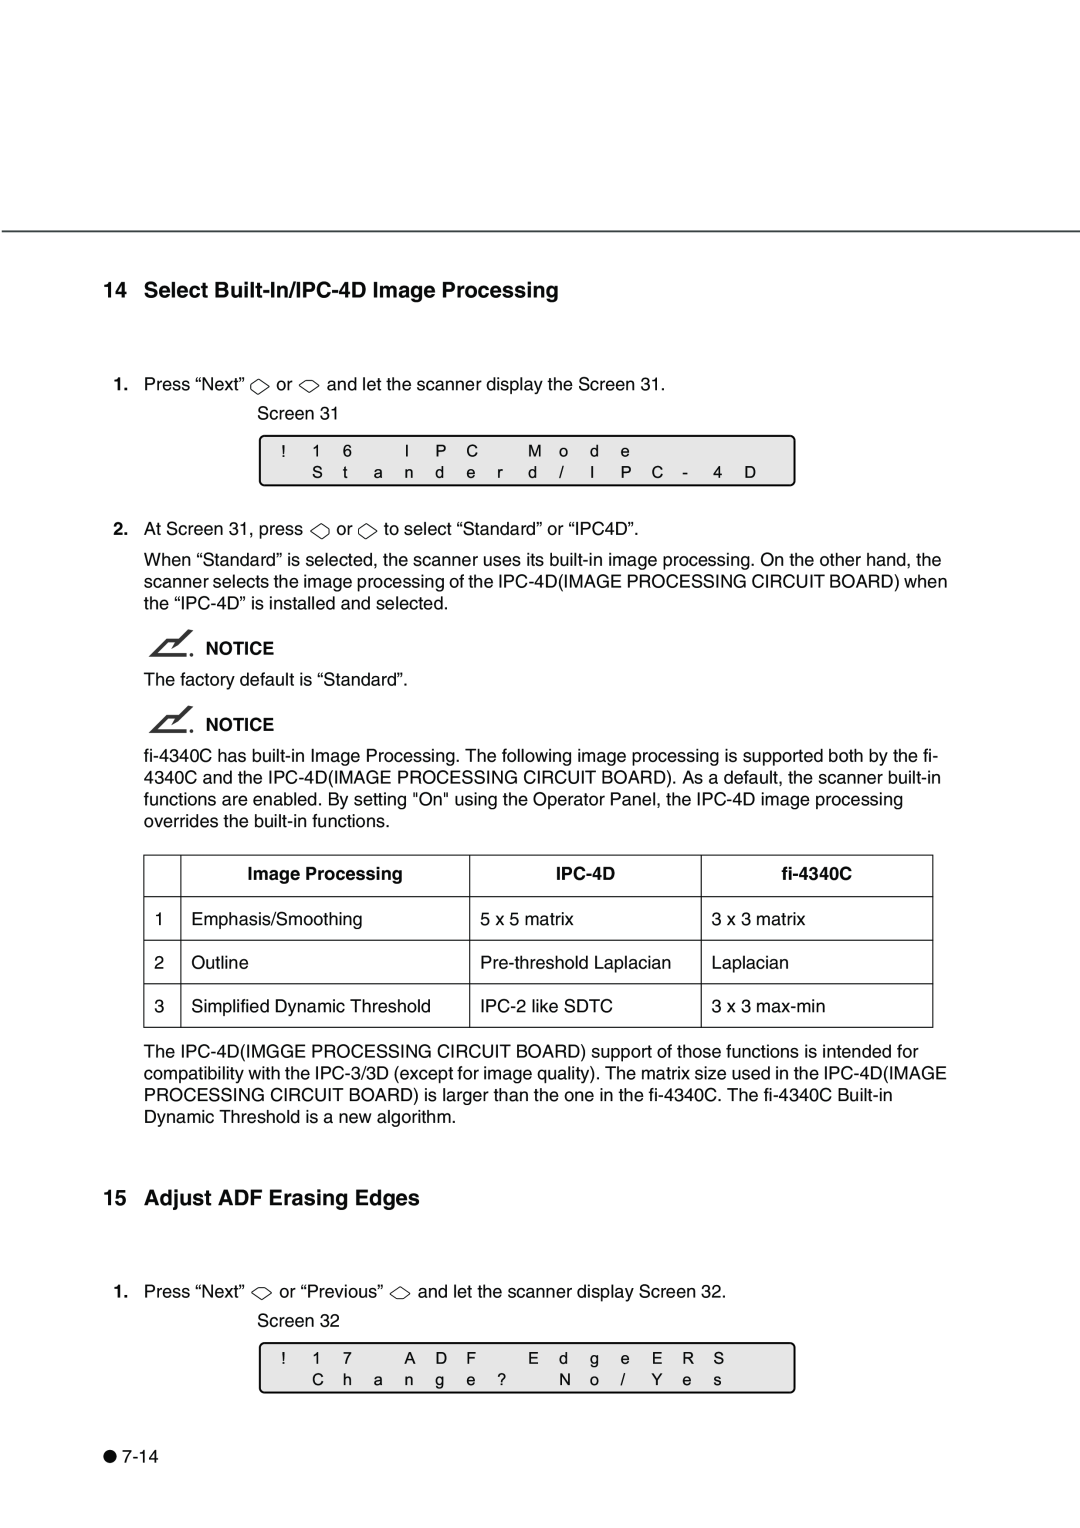 Fujitsu fi-4340C manual Select Built-In/IPC-4D Image Processing, Adjust ADF Erasing Edges 